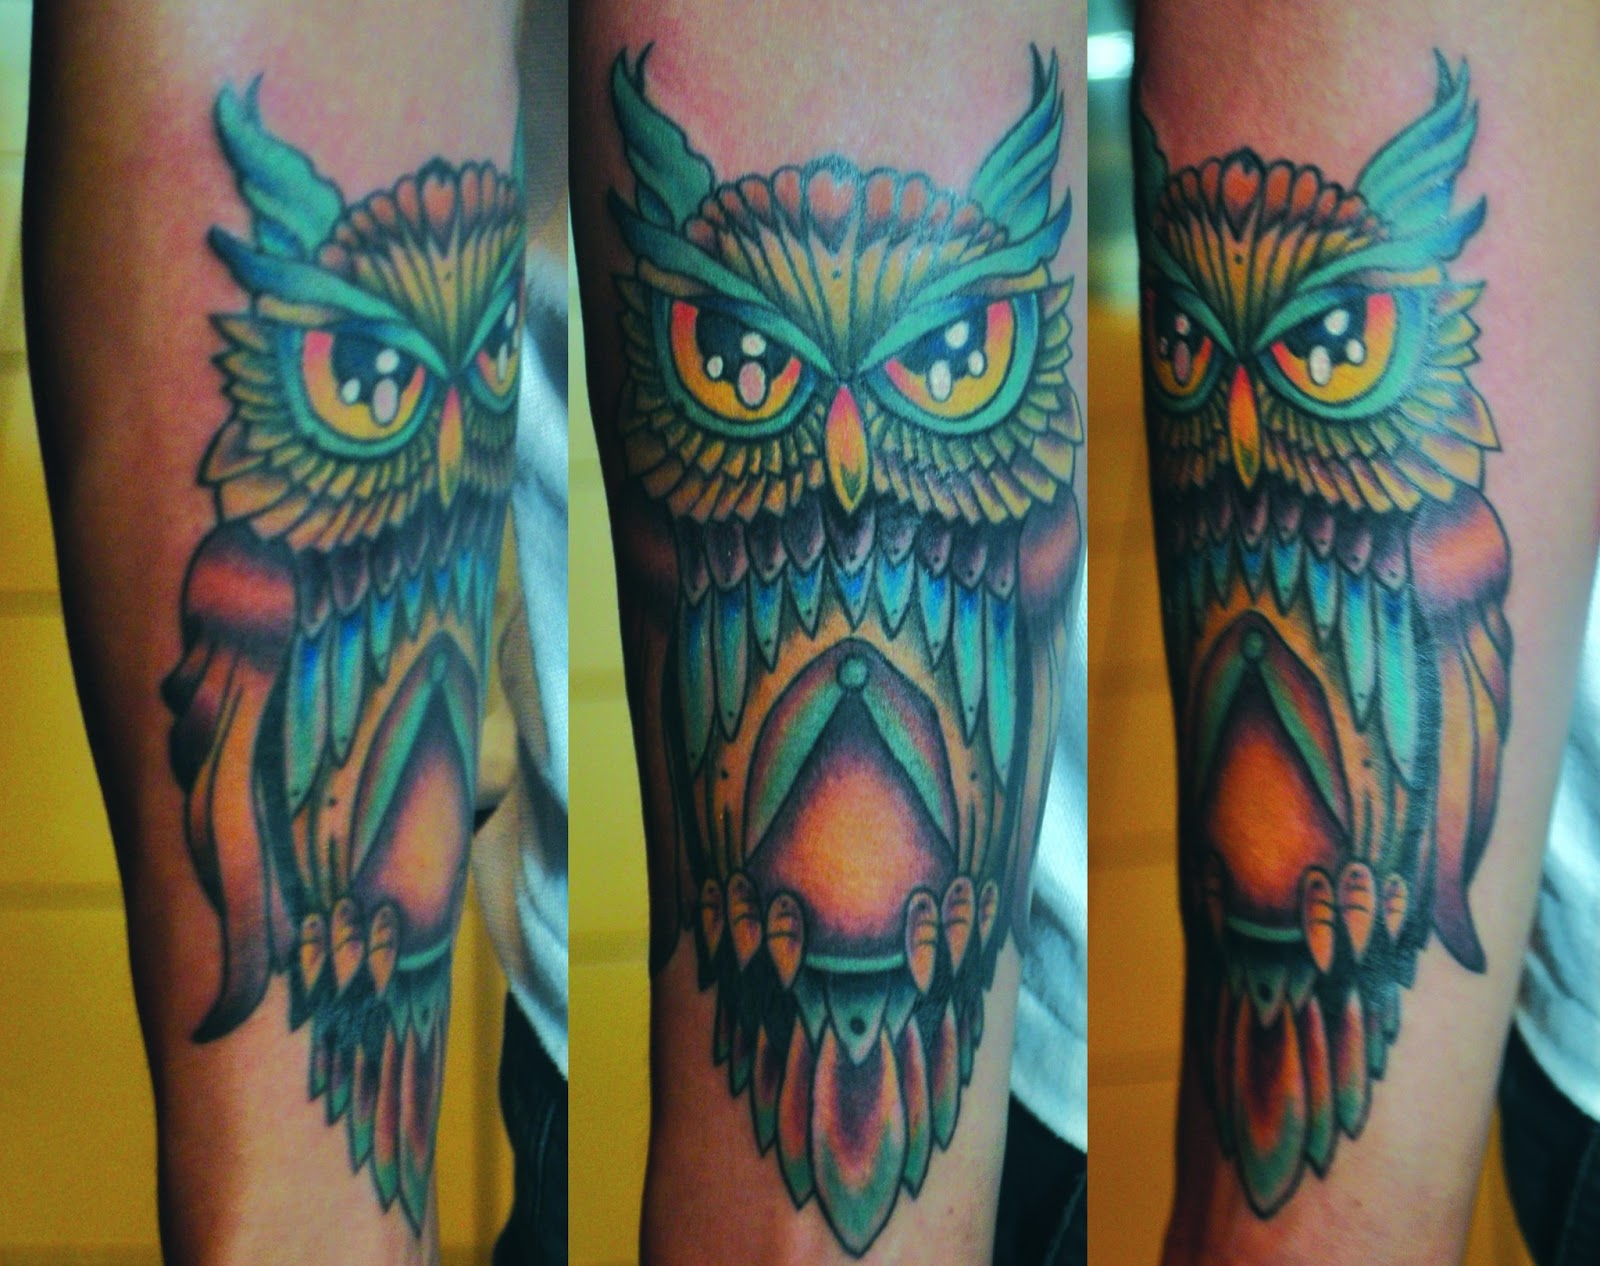 Nikko Samson Tattoo: an owl tattoo for roule